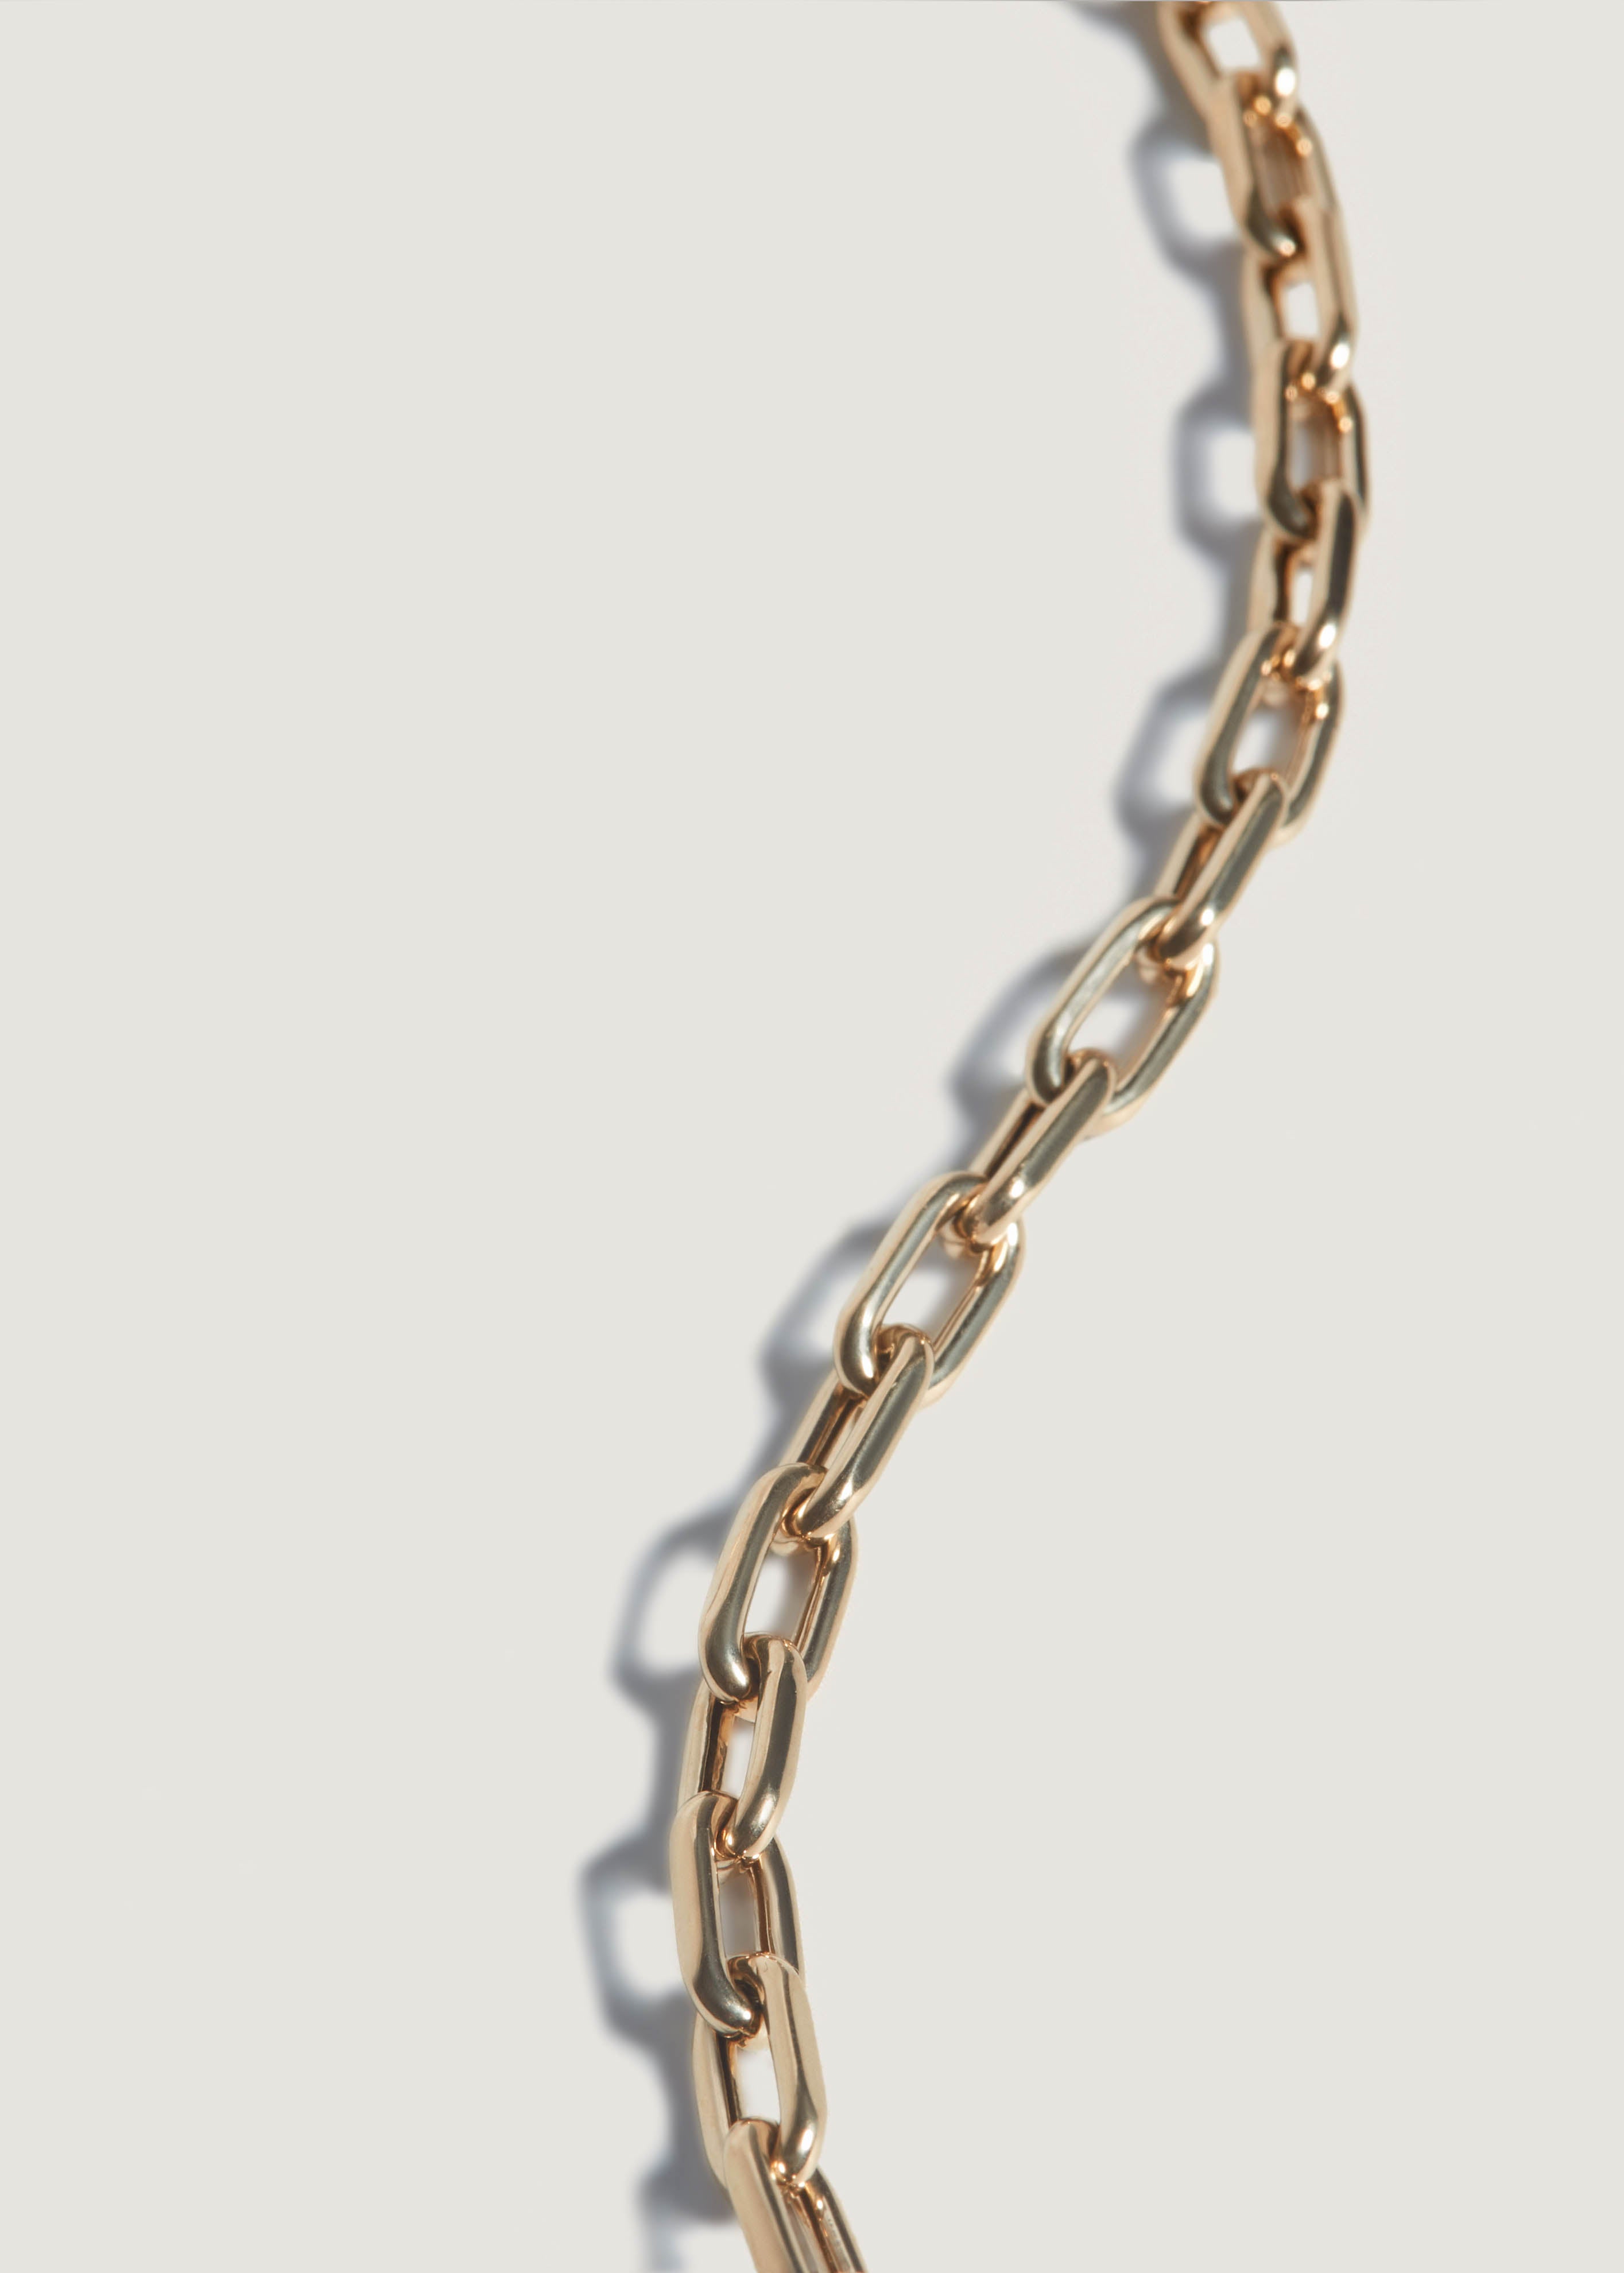 alt="close up of Mini Link Chain Necklace"